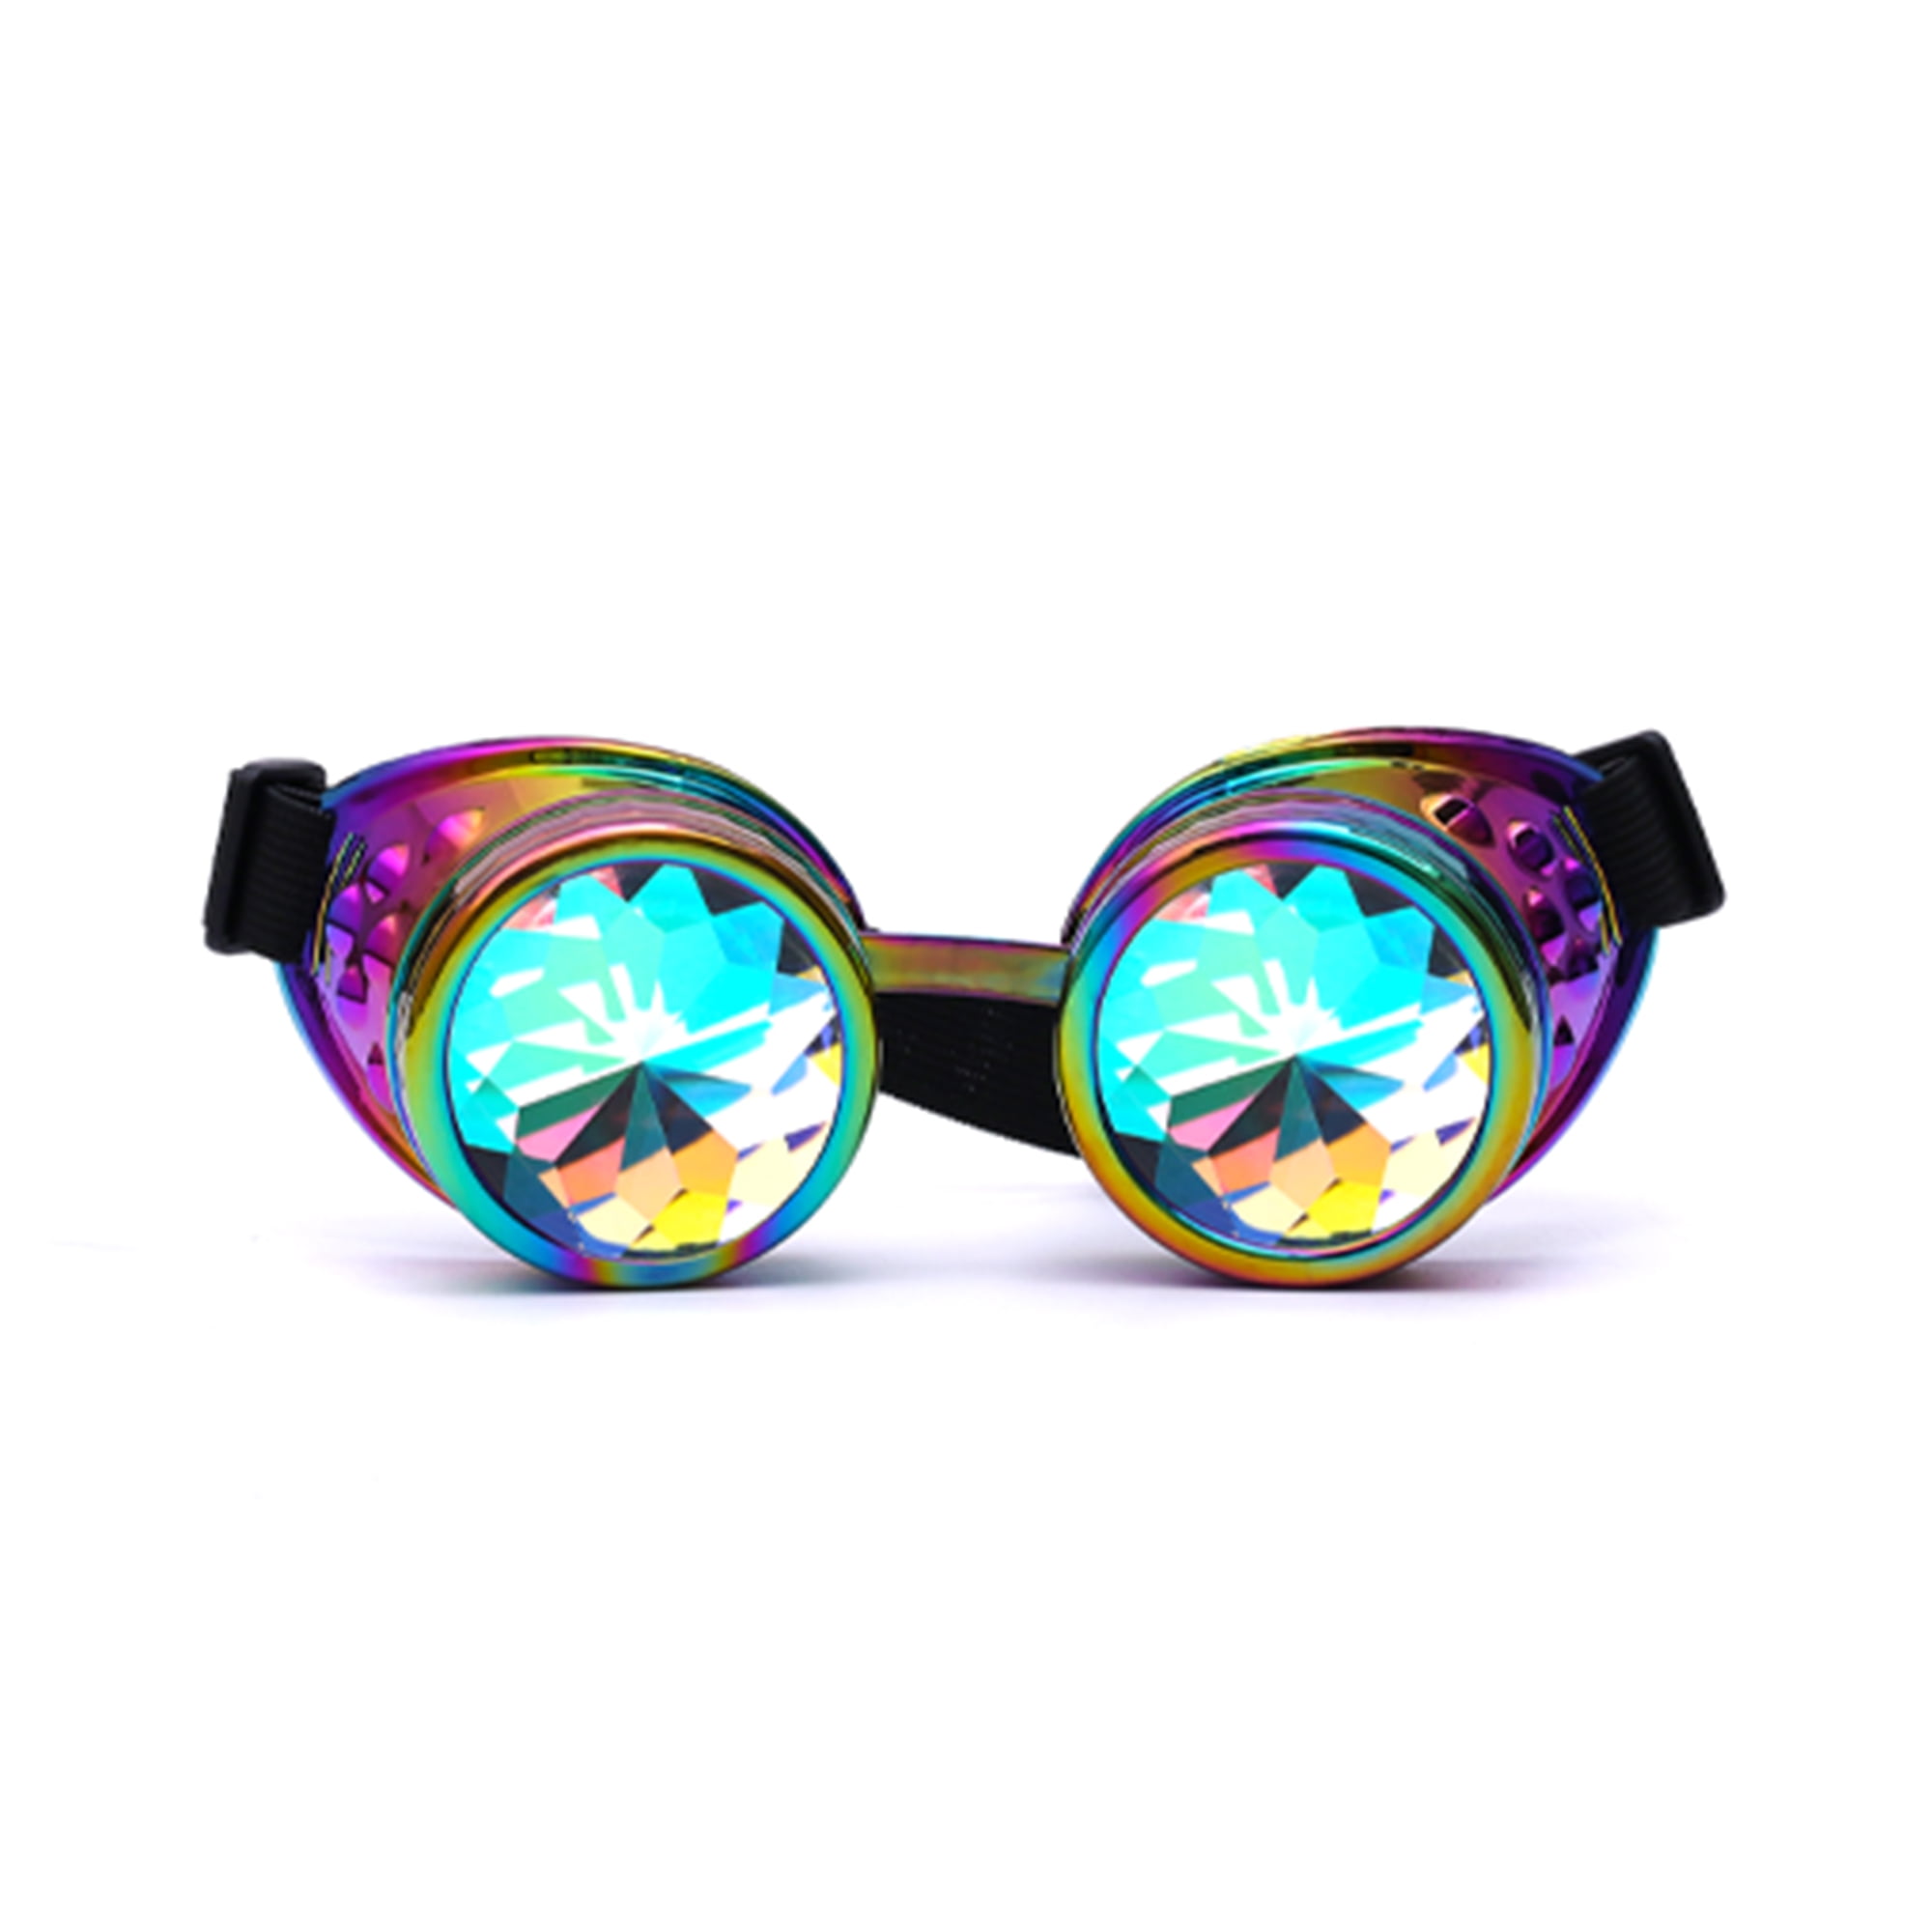 Crystal Vision Masquerade Fascinating Kaleidoscopic Steampunk Goggles 